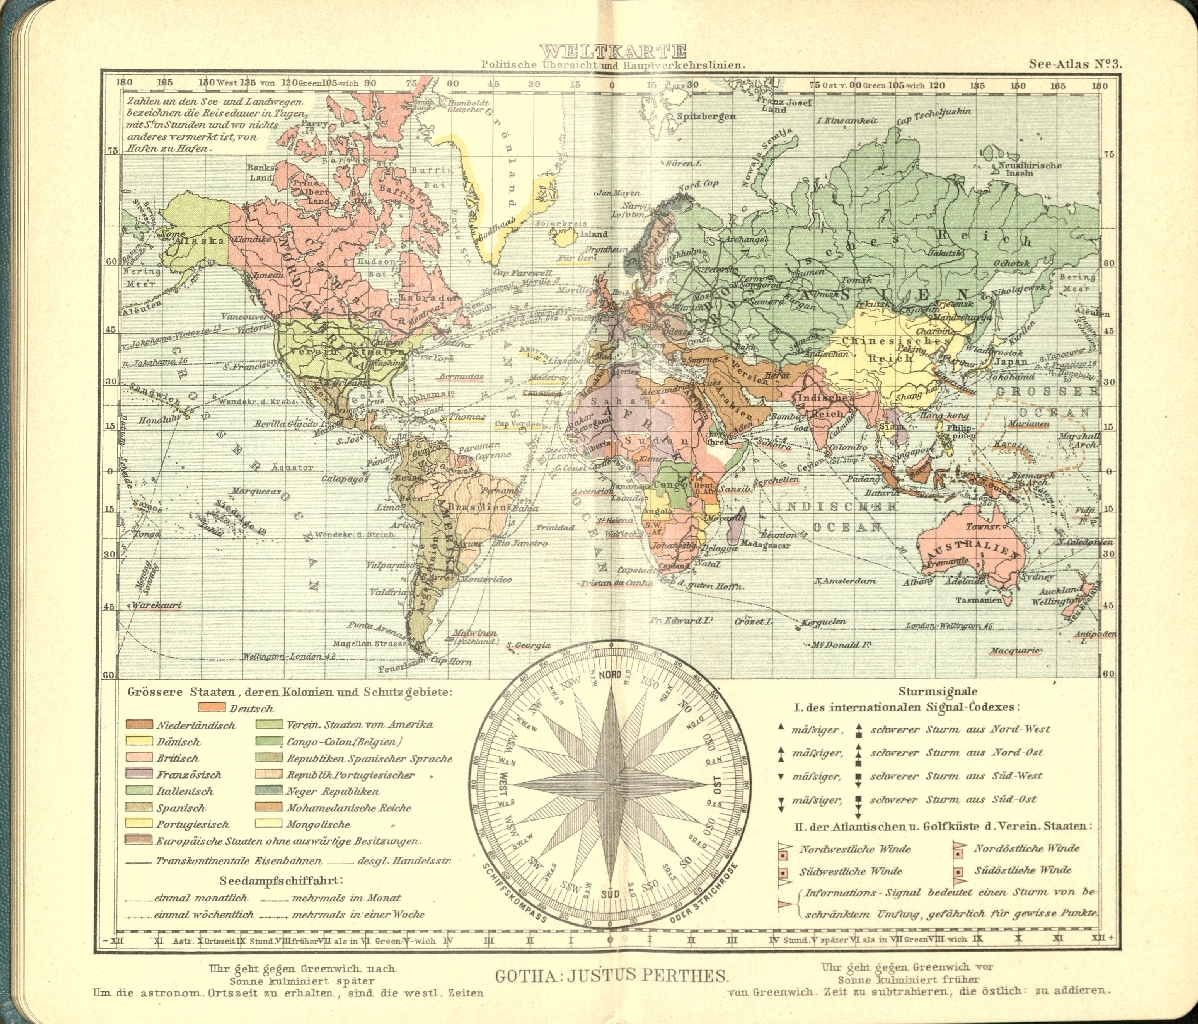 Justus Perthes's See-Atlas, 1912